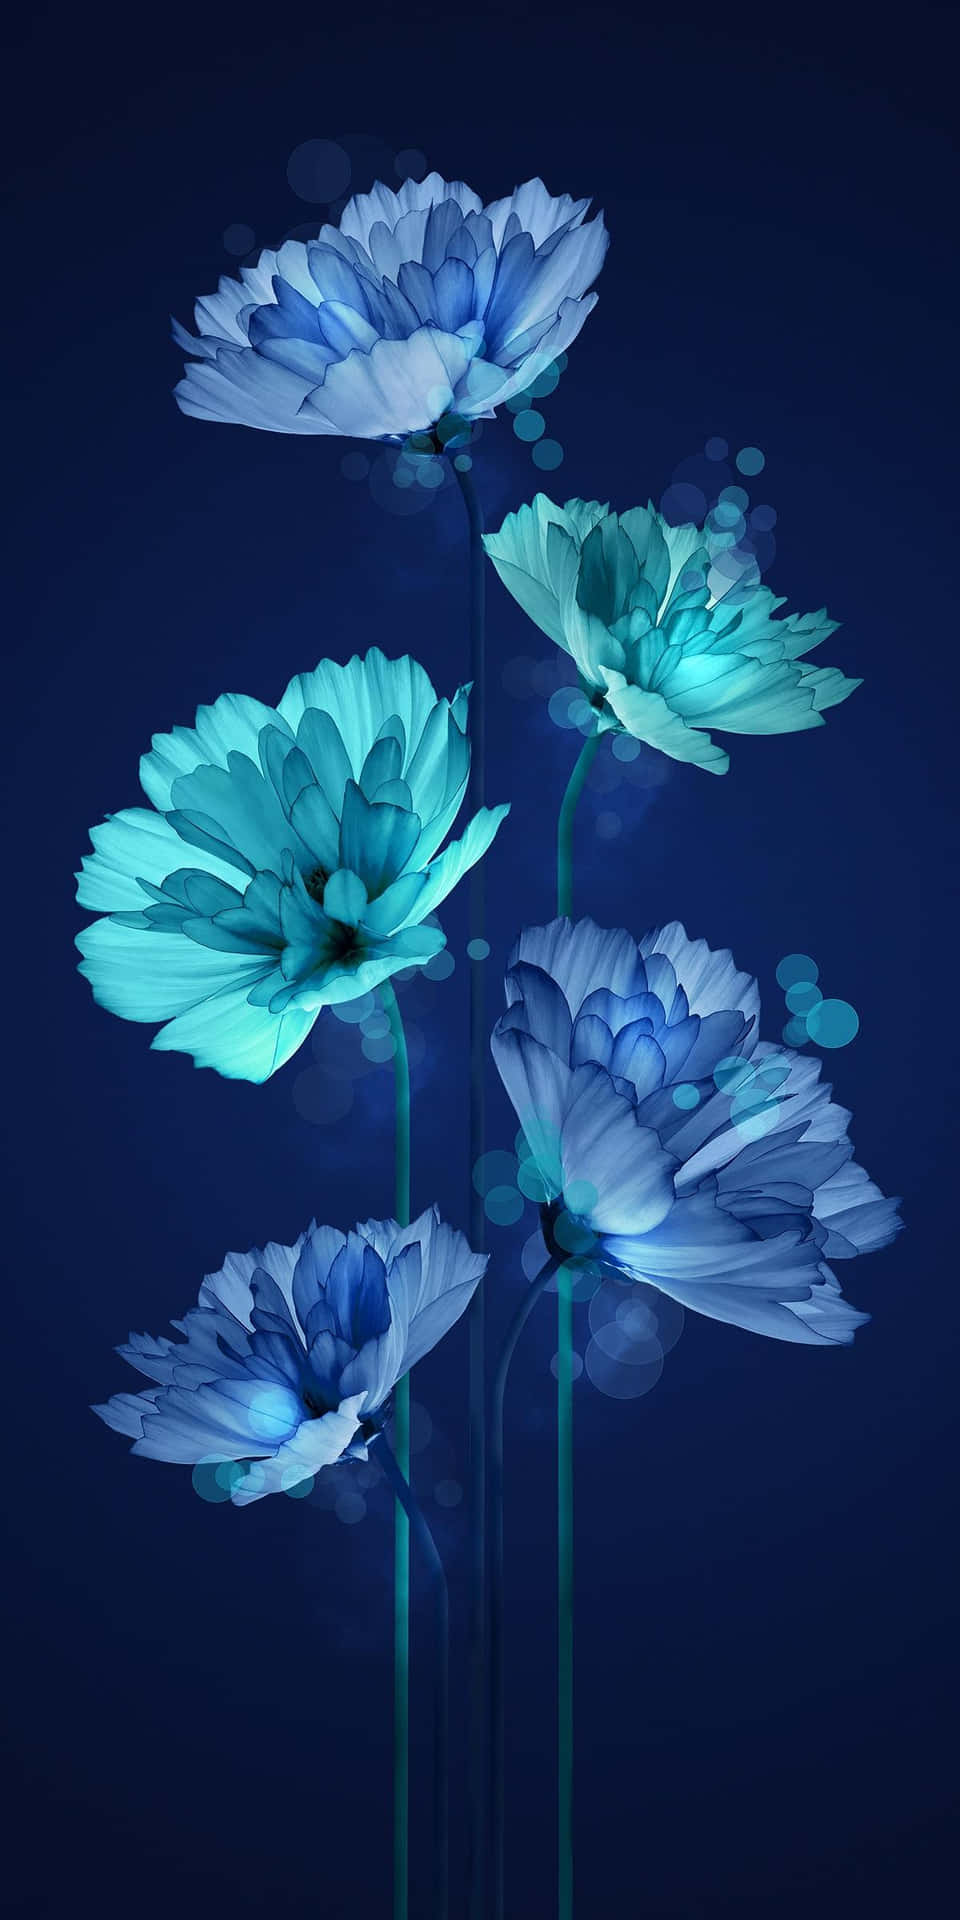 Blue Flowers On A Dark Background Wallpaper